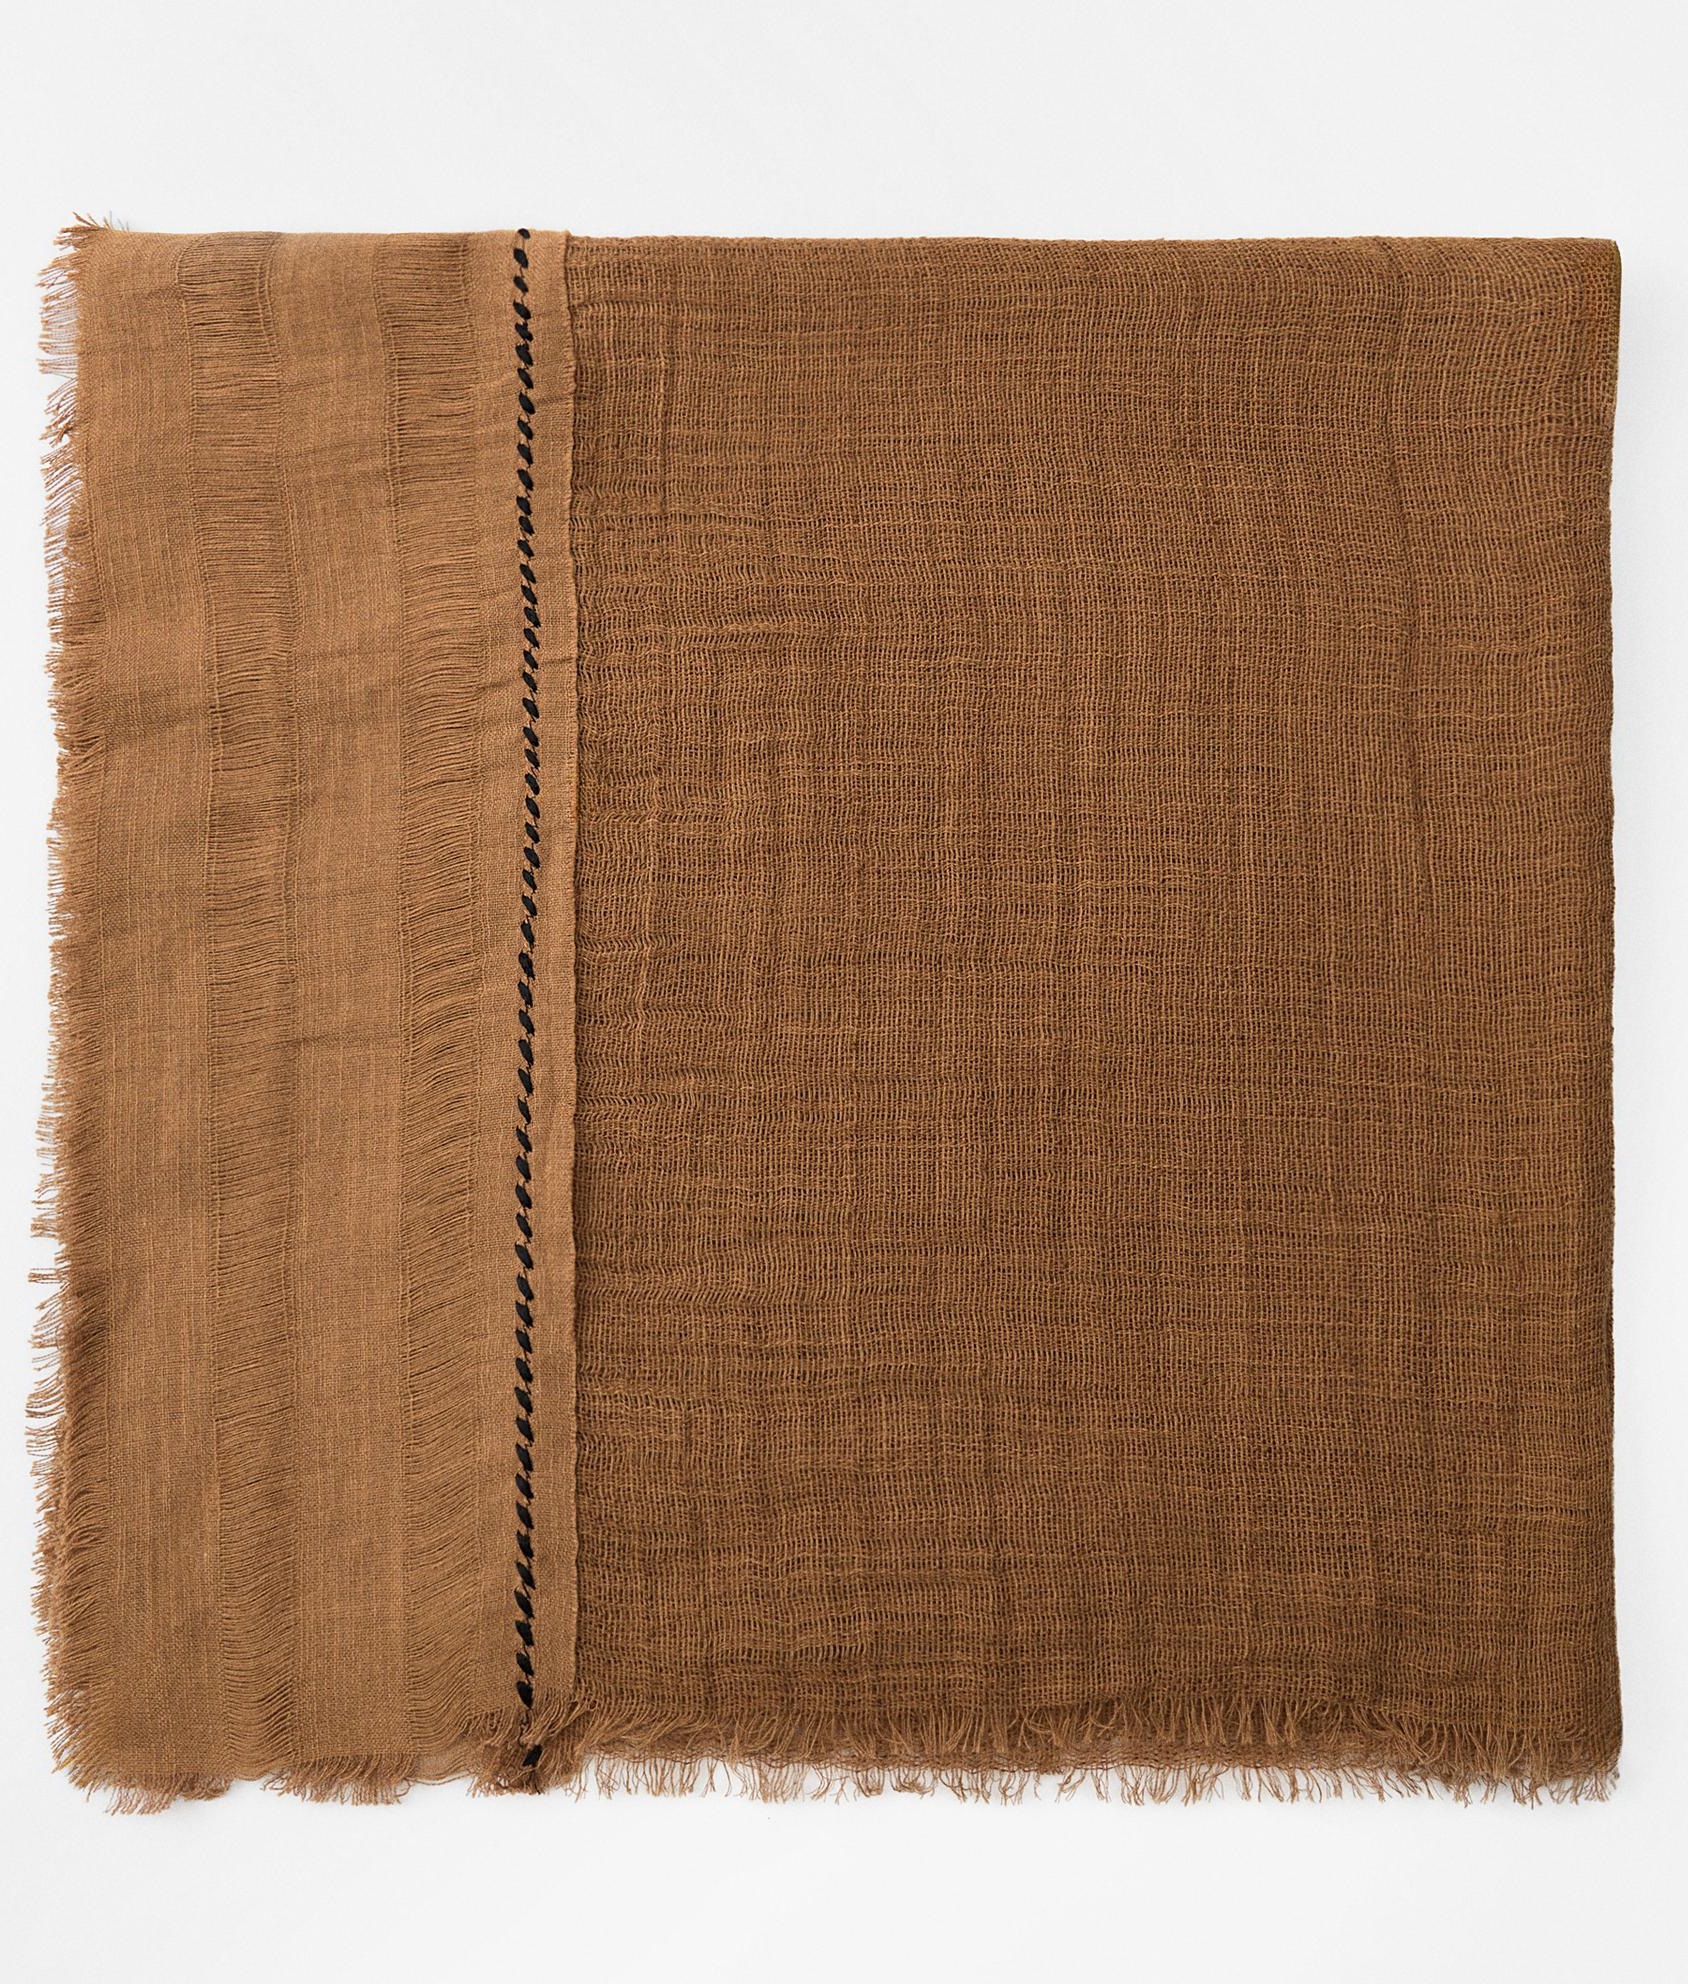 Шарф Zara Linen Blend With Topstitching, коричневый